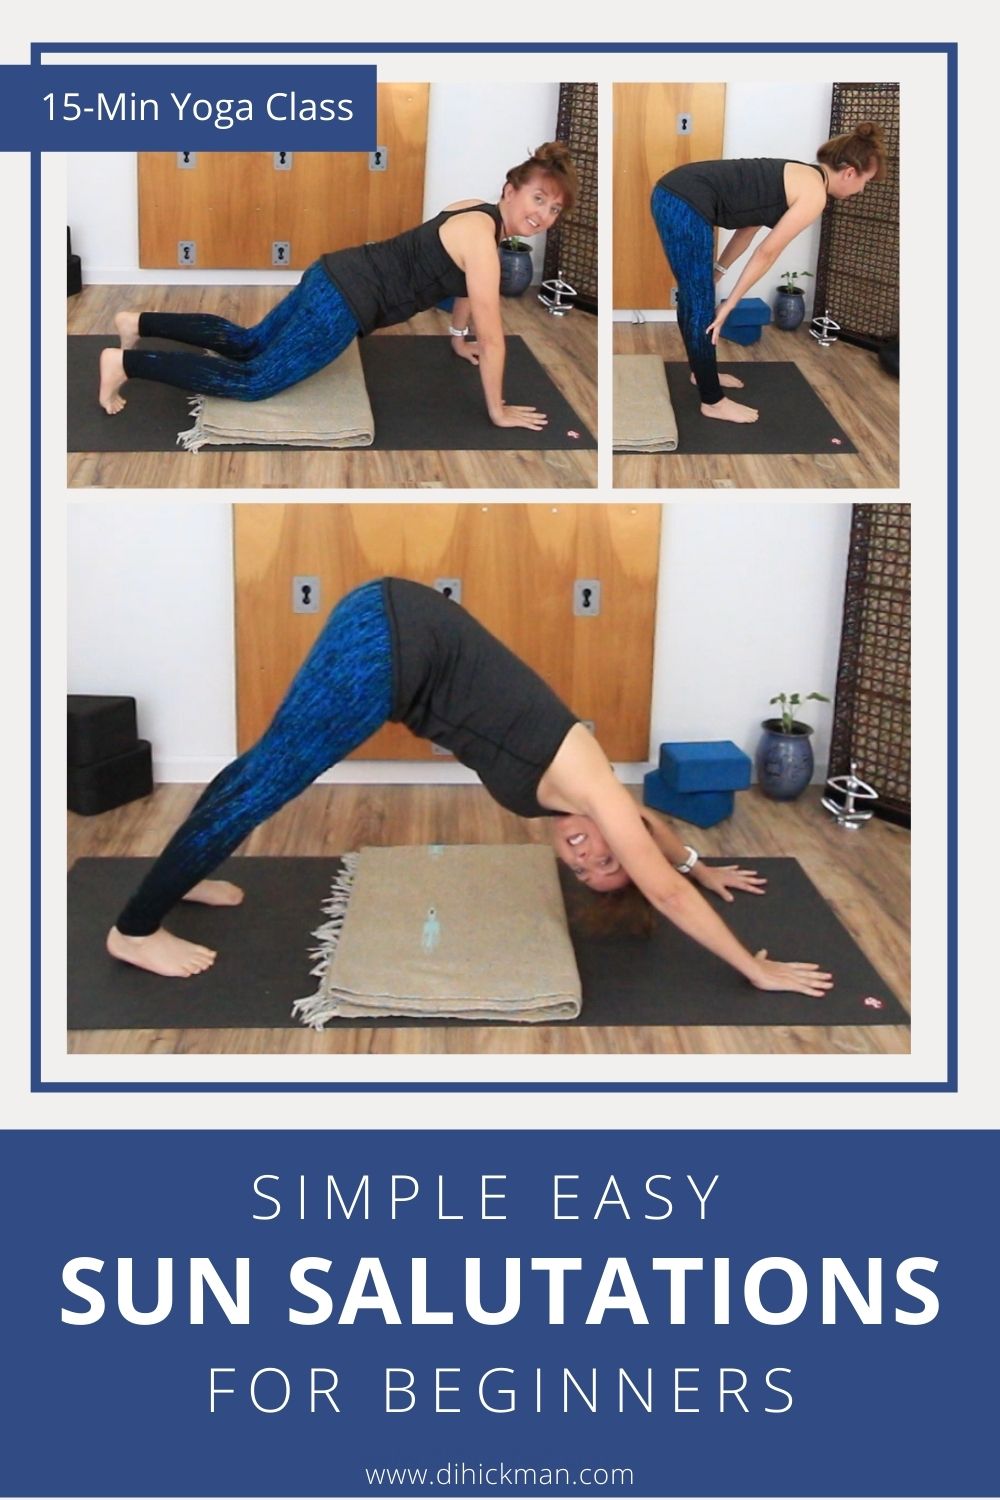 15 min yoga class, Simple easy sun salutations for beginners